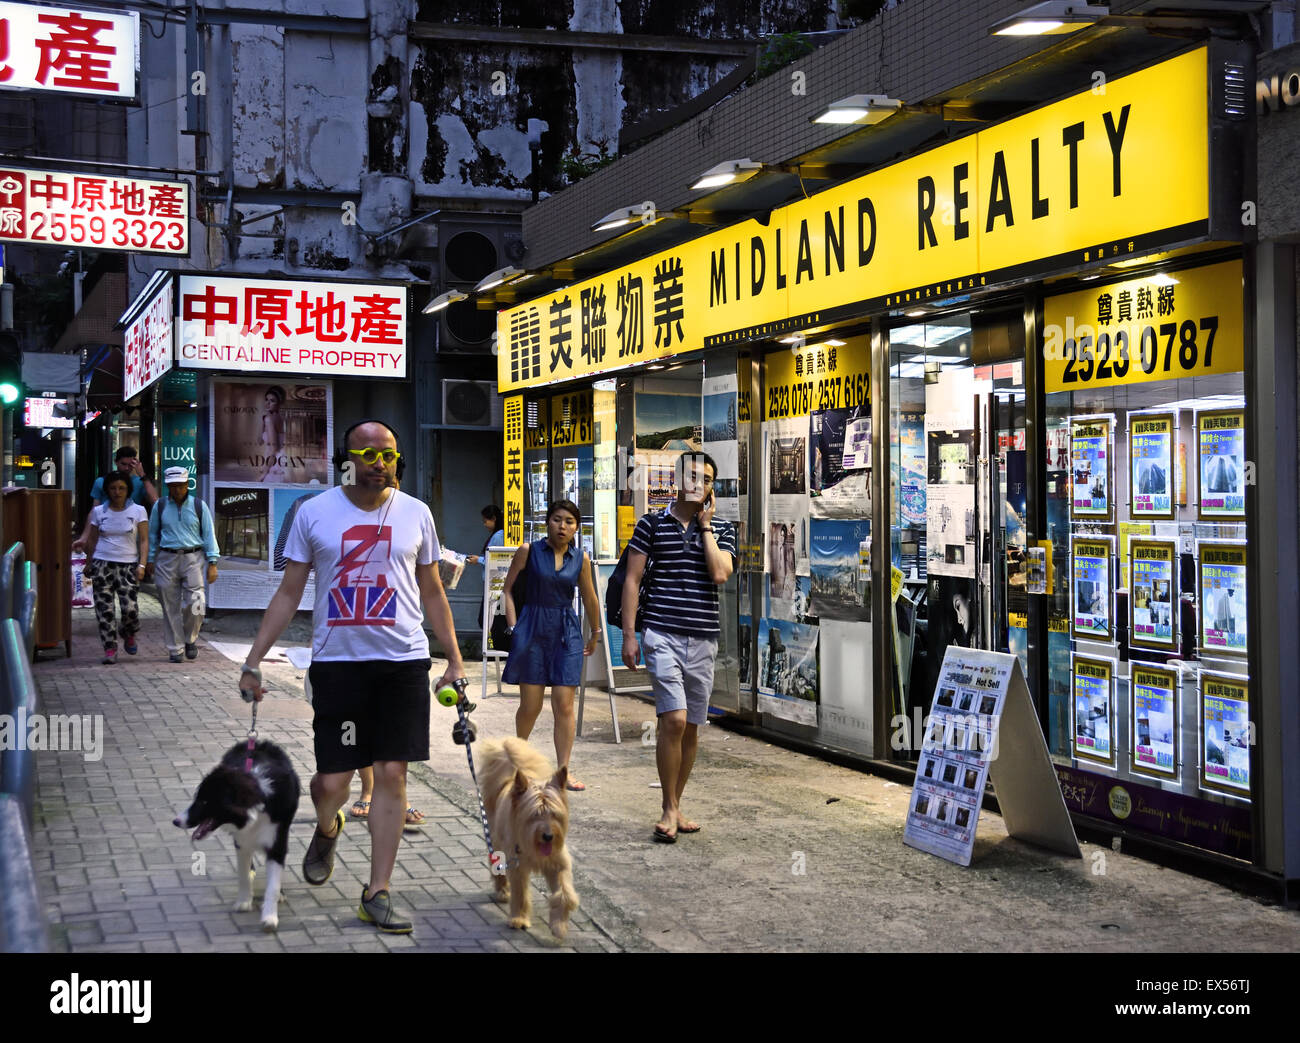 Immobilien zum Verkauf in einem Immobilienmakler Fenster Hong Kong Insel Sonderverwaltungsregion Hongkong China chinesische Stockfoto